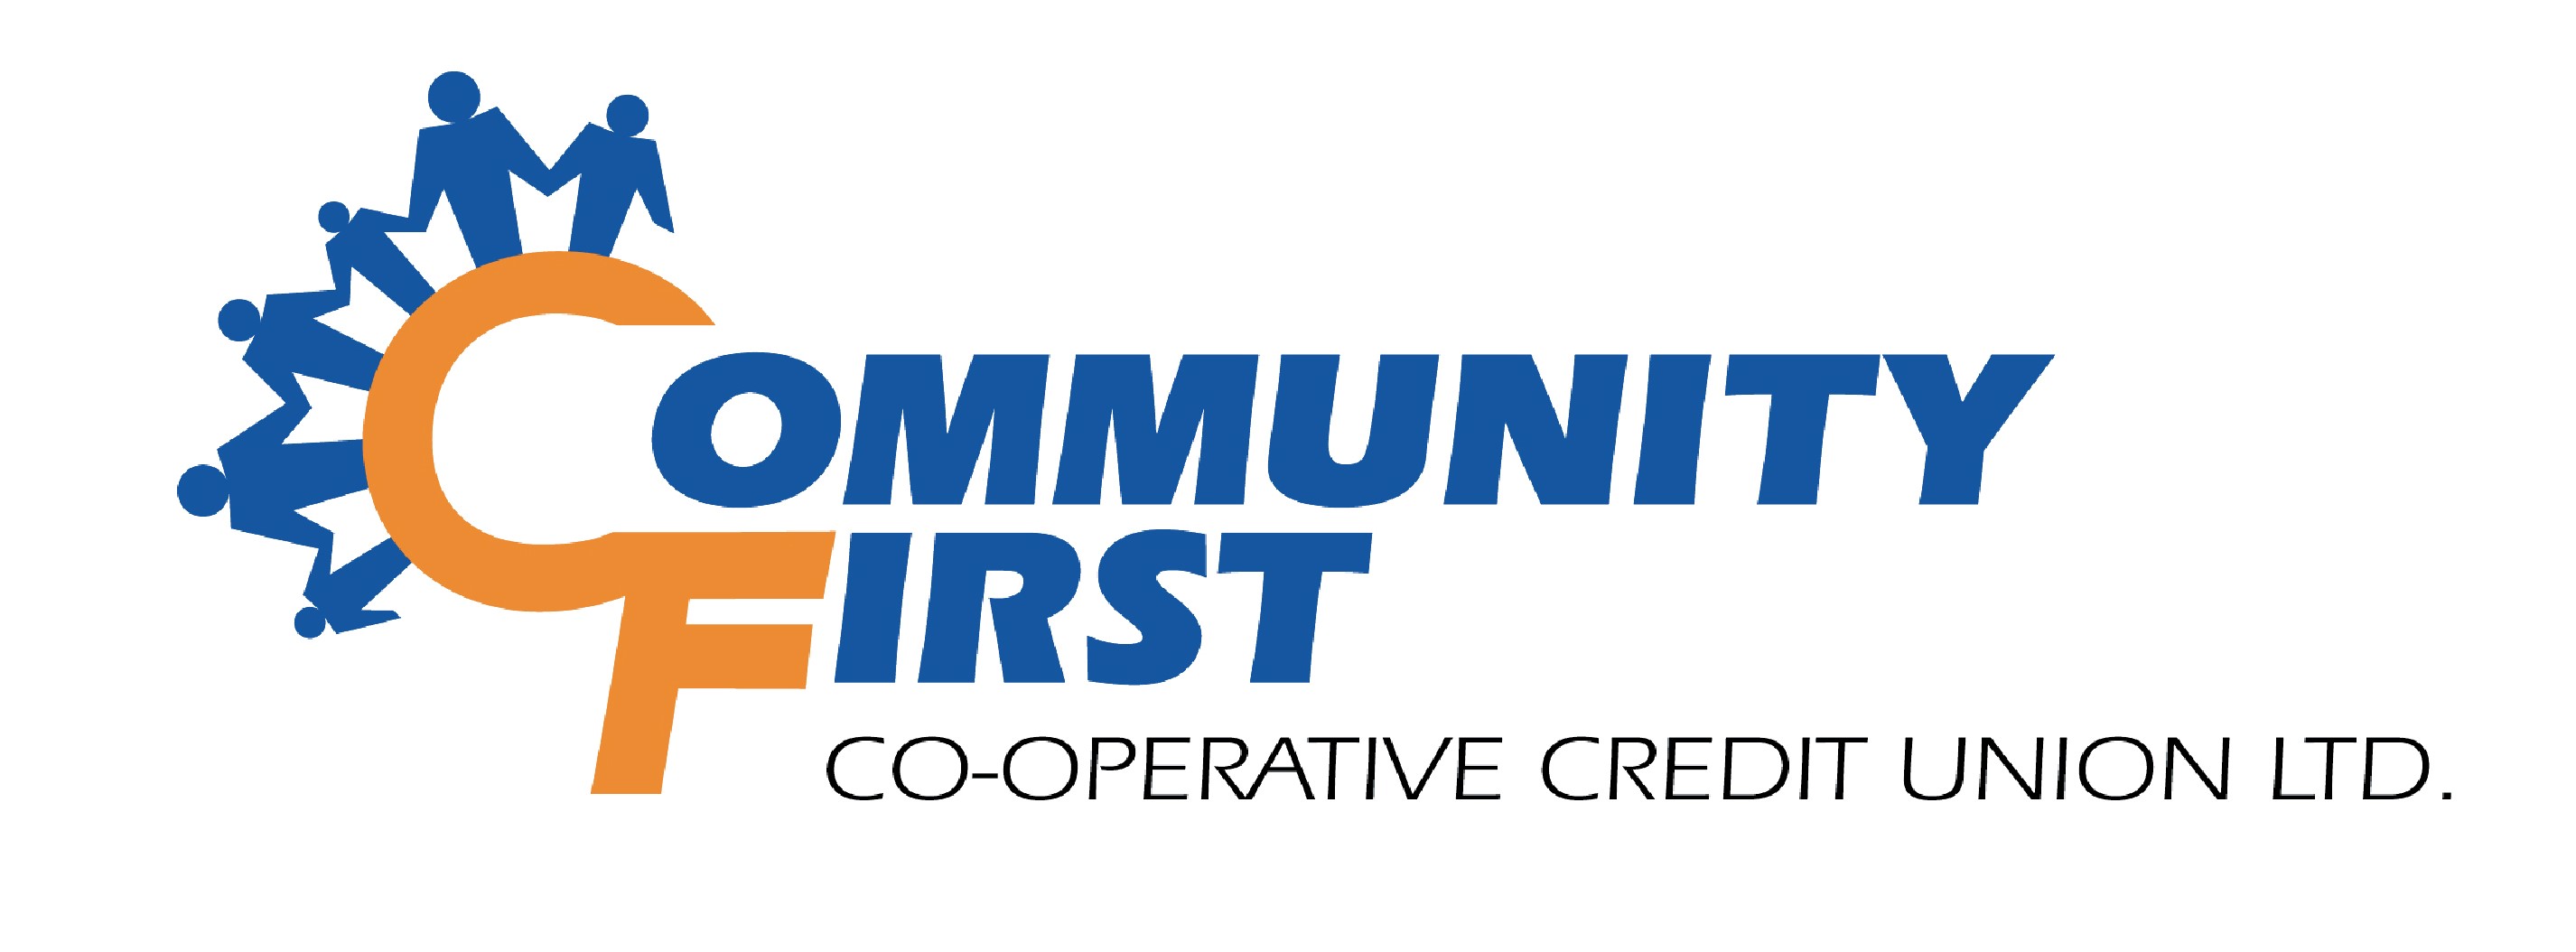 Community First Co-operative Credit Union Ltd